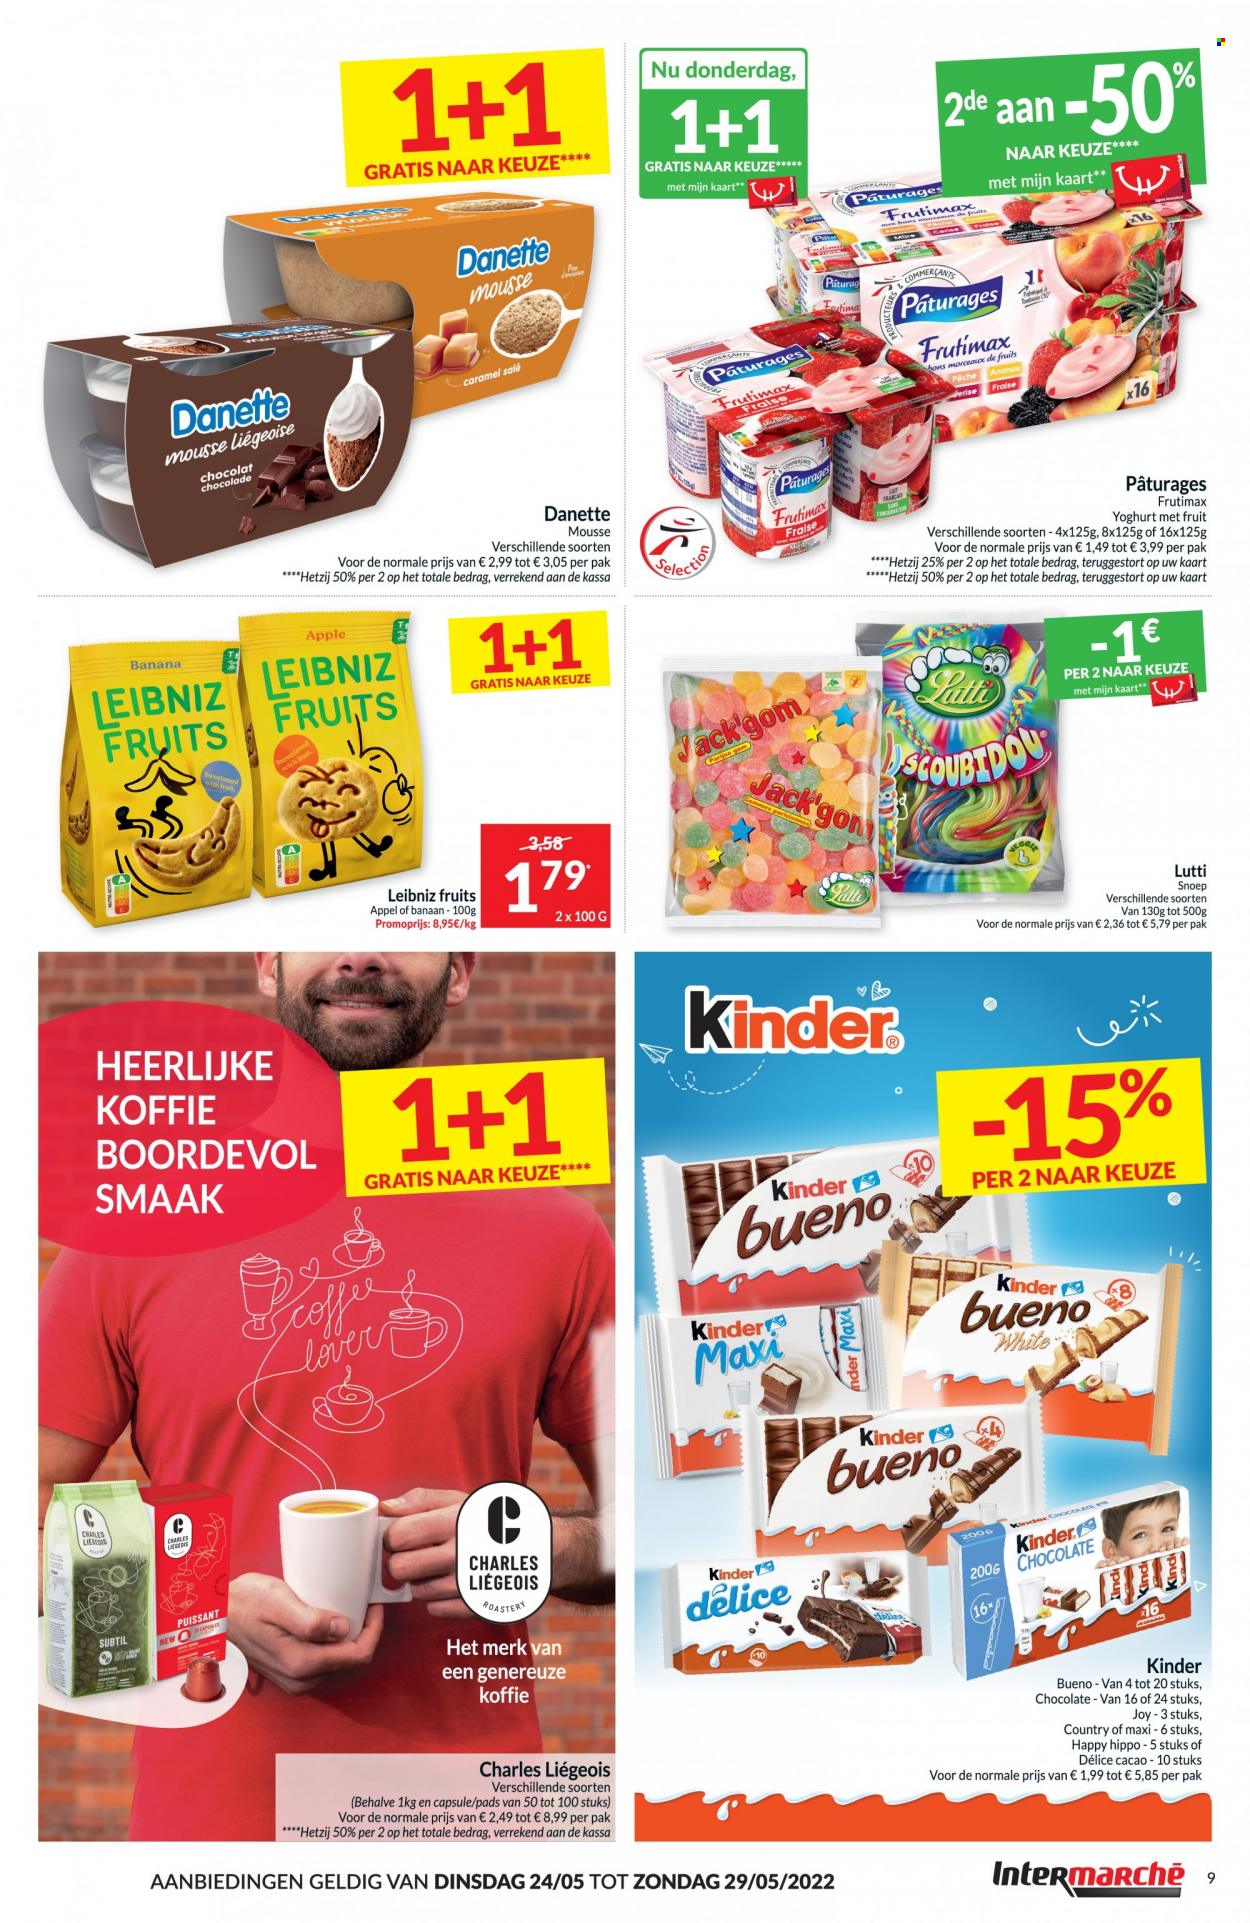 thumbnail - Intermarché-aanbieding - 24/05/2022 - 29/05/2022 -  producten in de aanbieding - banaan, ananas, Danette, yoghurt, chocolade, koffie. Pagina 9.